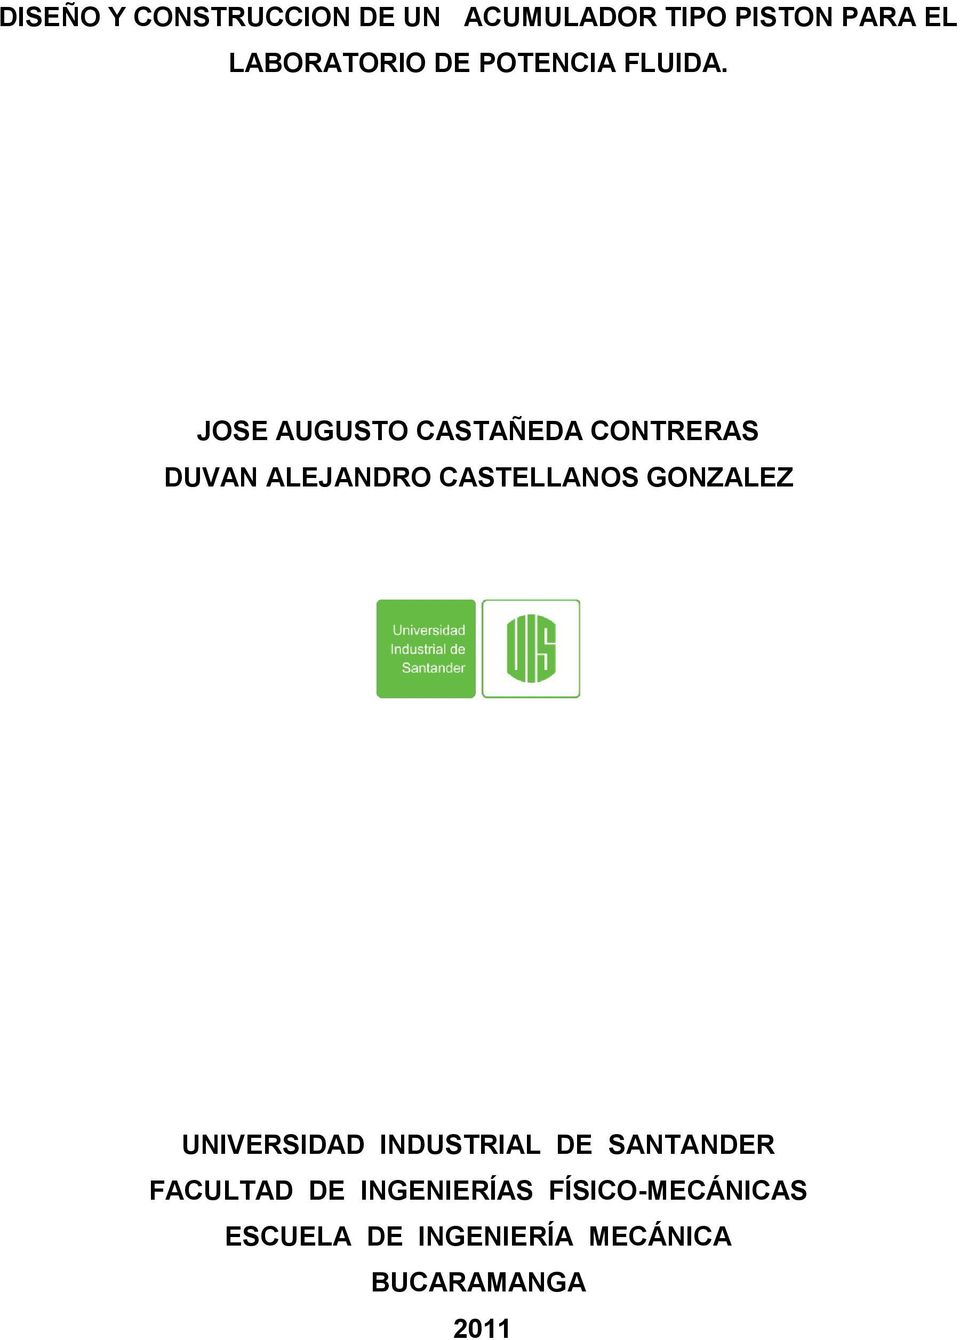 JOSE AUGUSTO CASTAÑEDA CONTRERAS DUVAN ALEJANDRO CASTELLANOS GONZALEZ